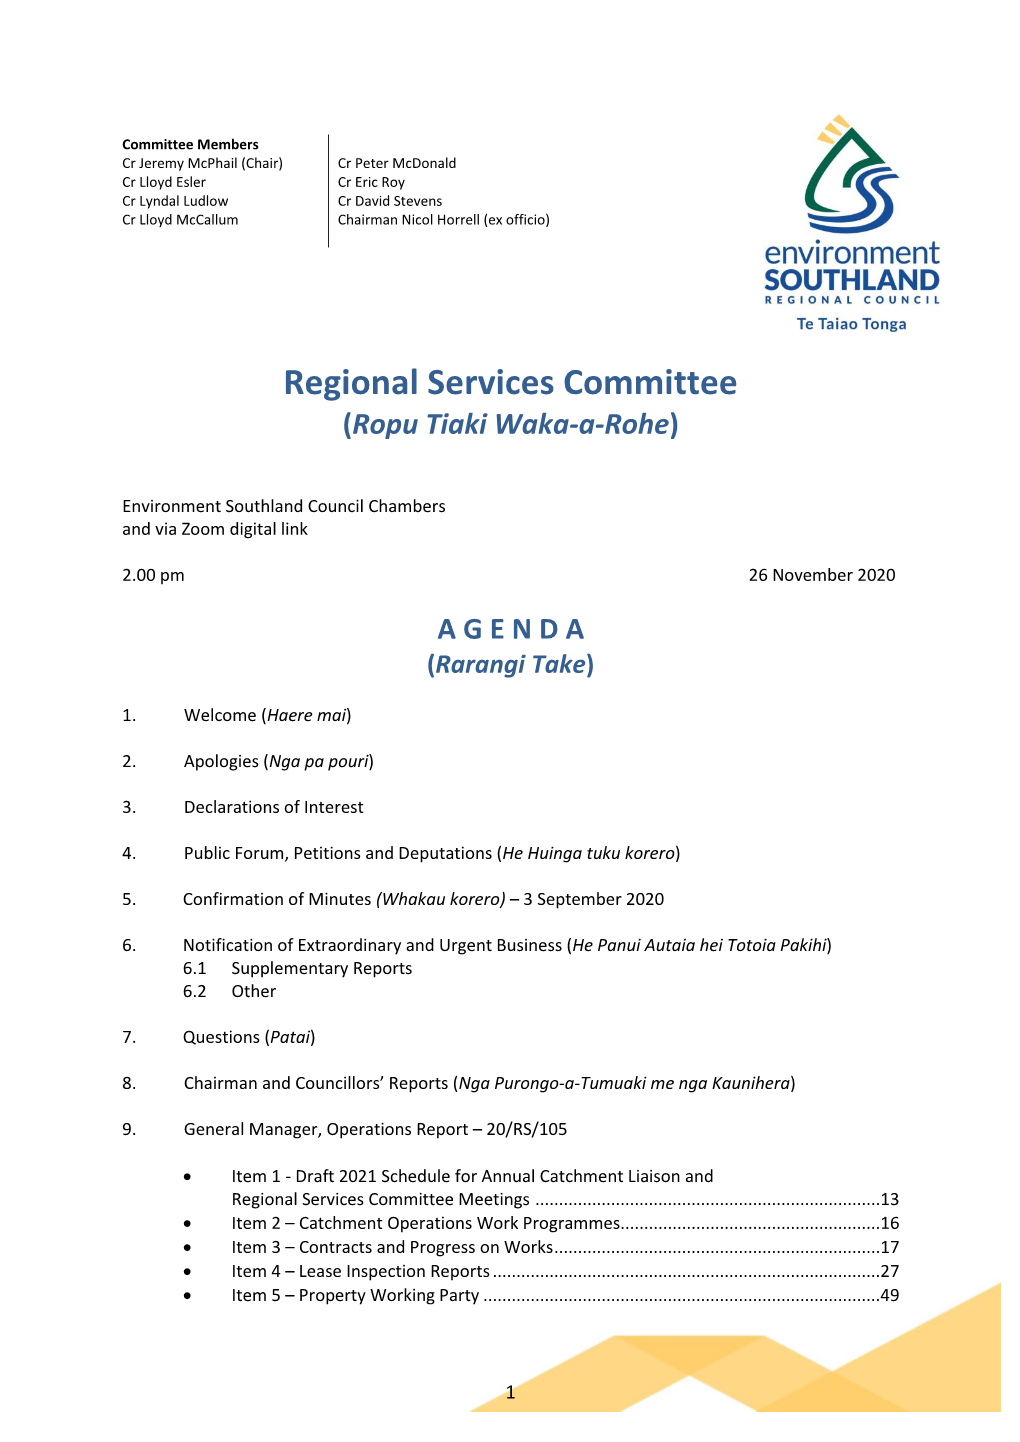 Regional Services Committee Agenda